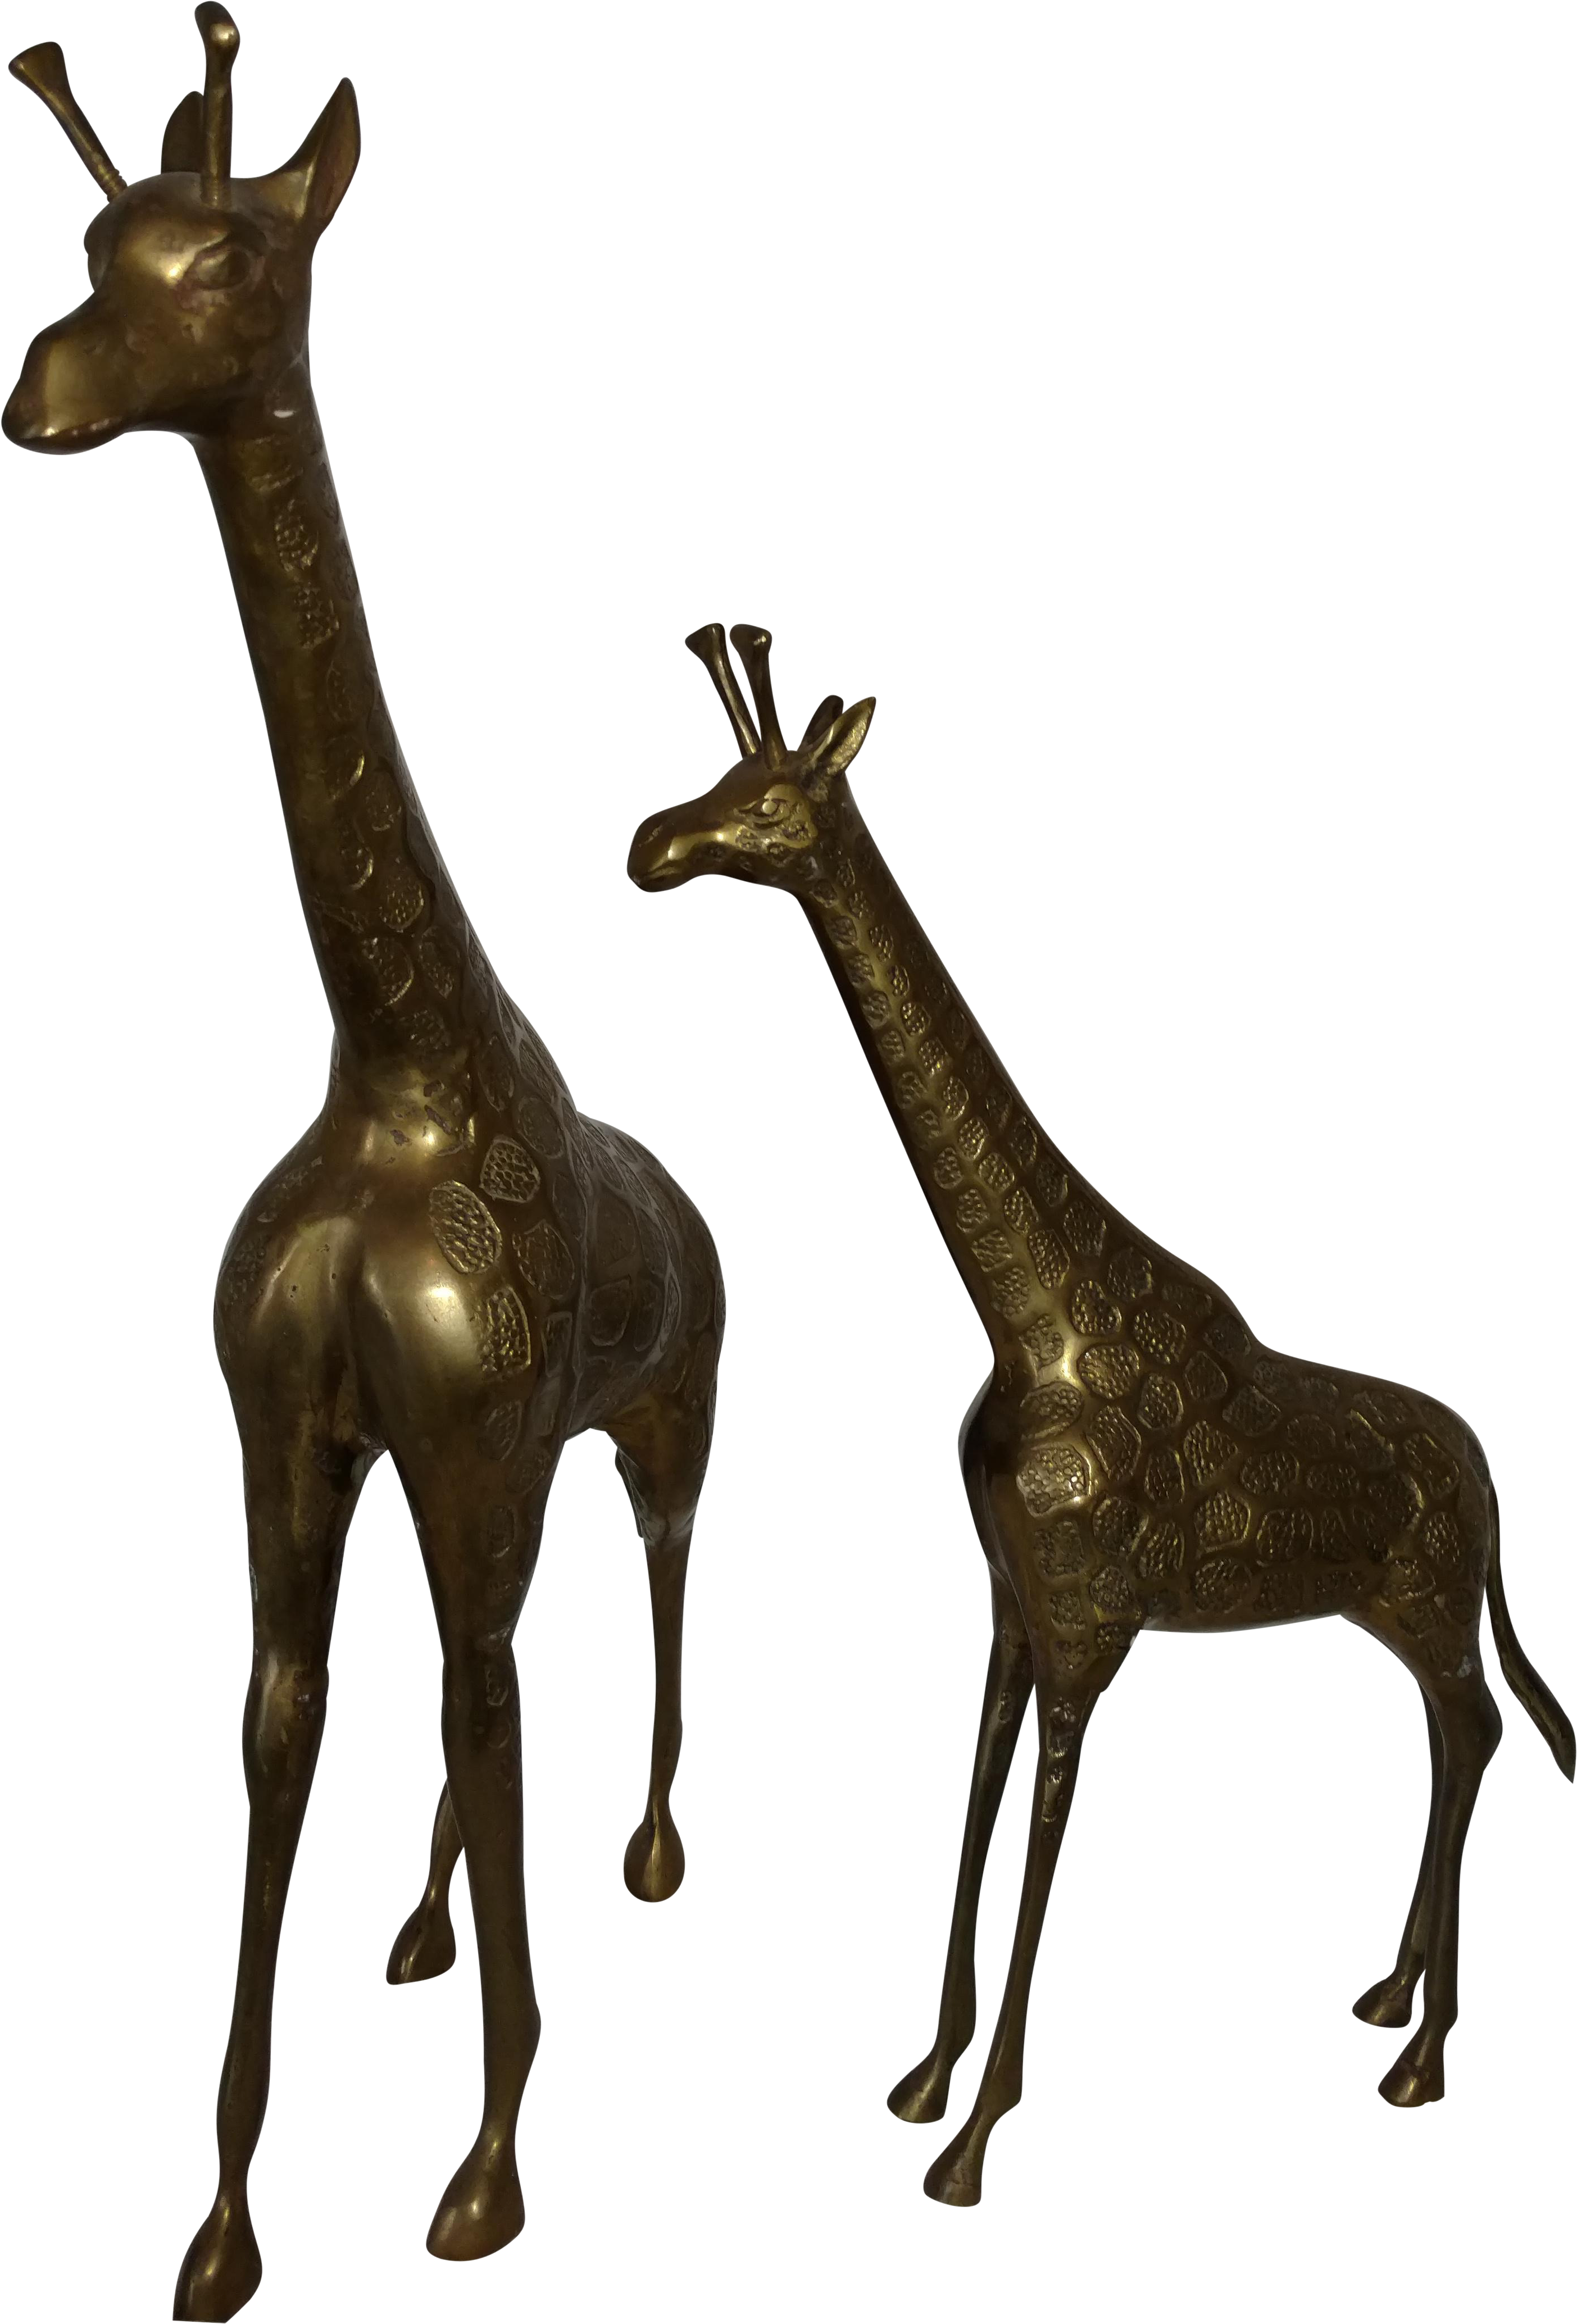 Giraffe (3118x4596)